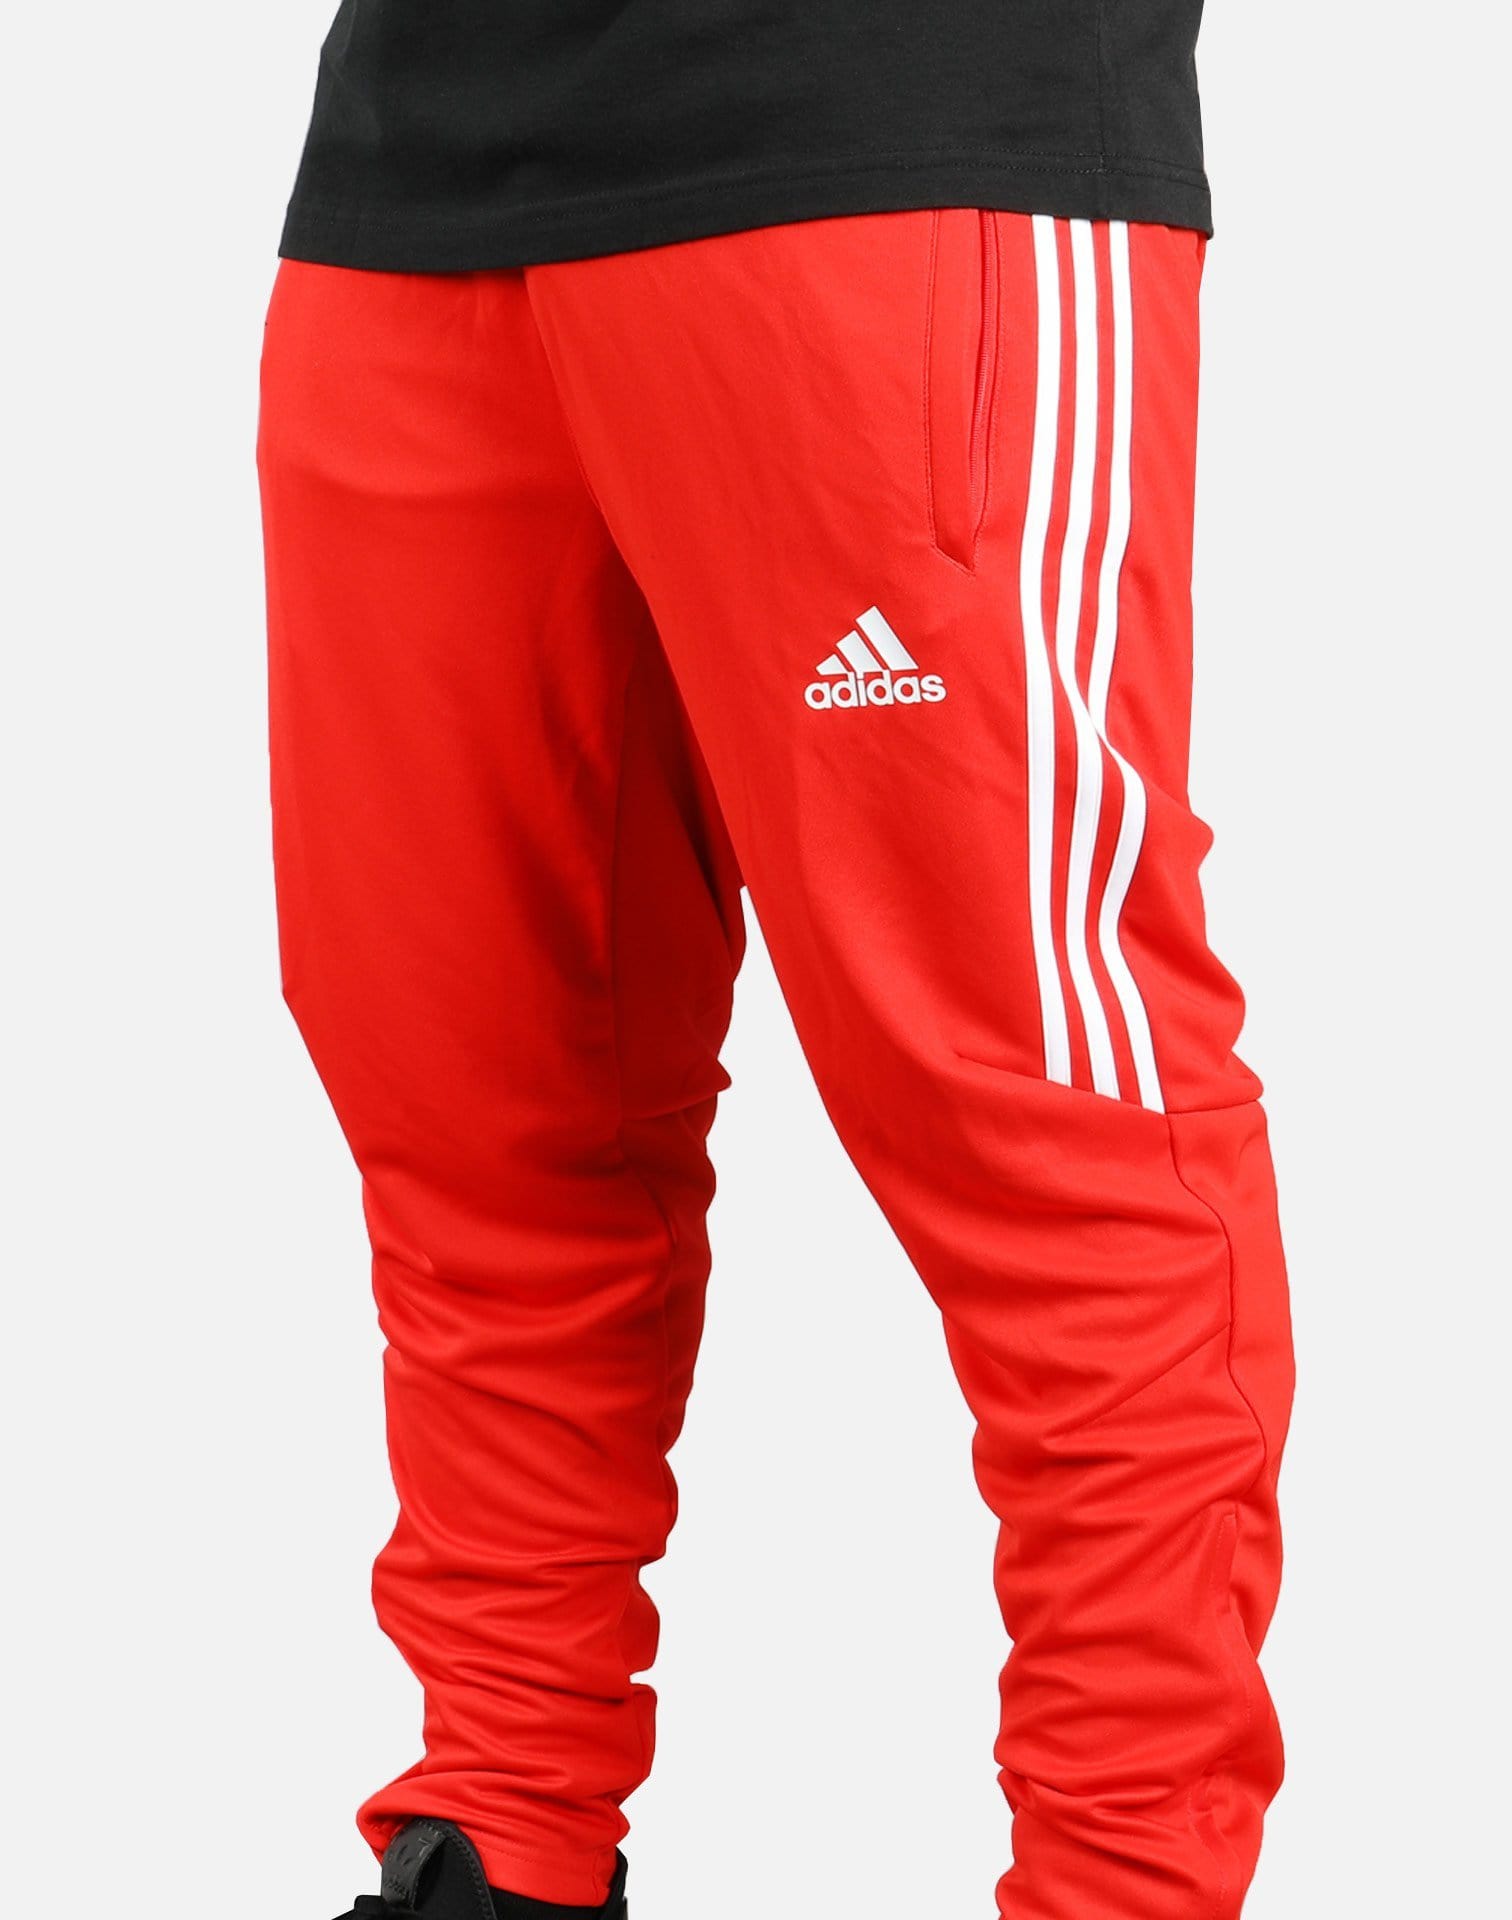 adidas Tiro 17 Training Pants (Core Red/White)